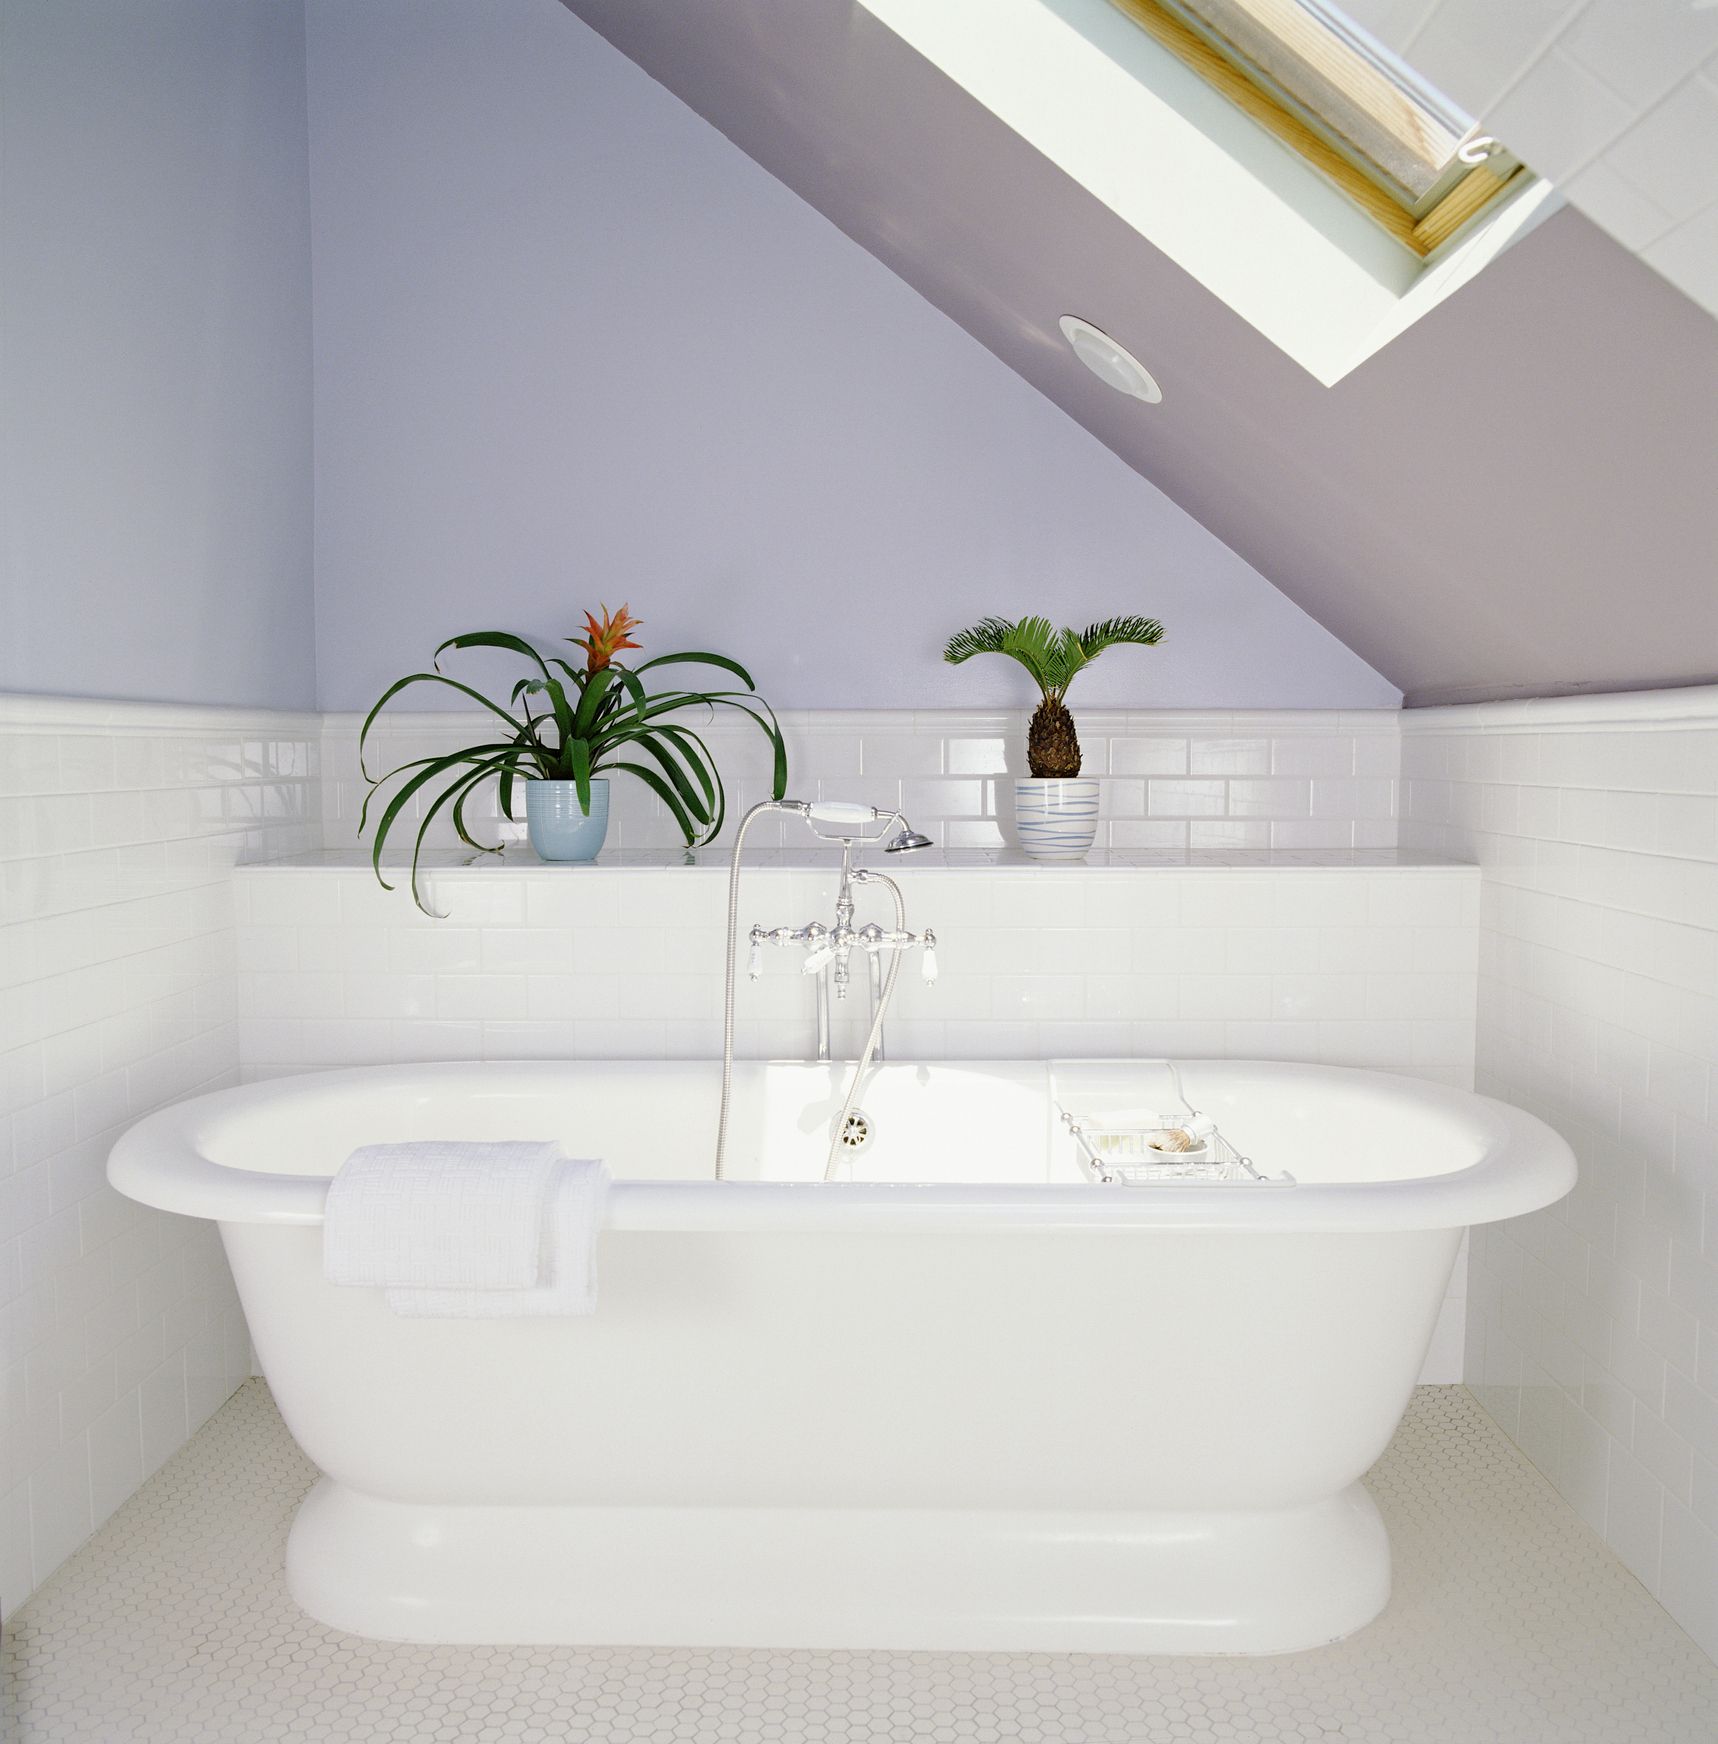 Buy Multifunctional Anti-mold Shower Room Bath Step Foot Mat